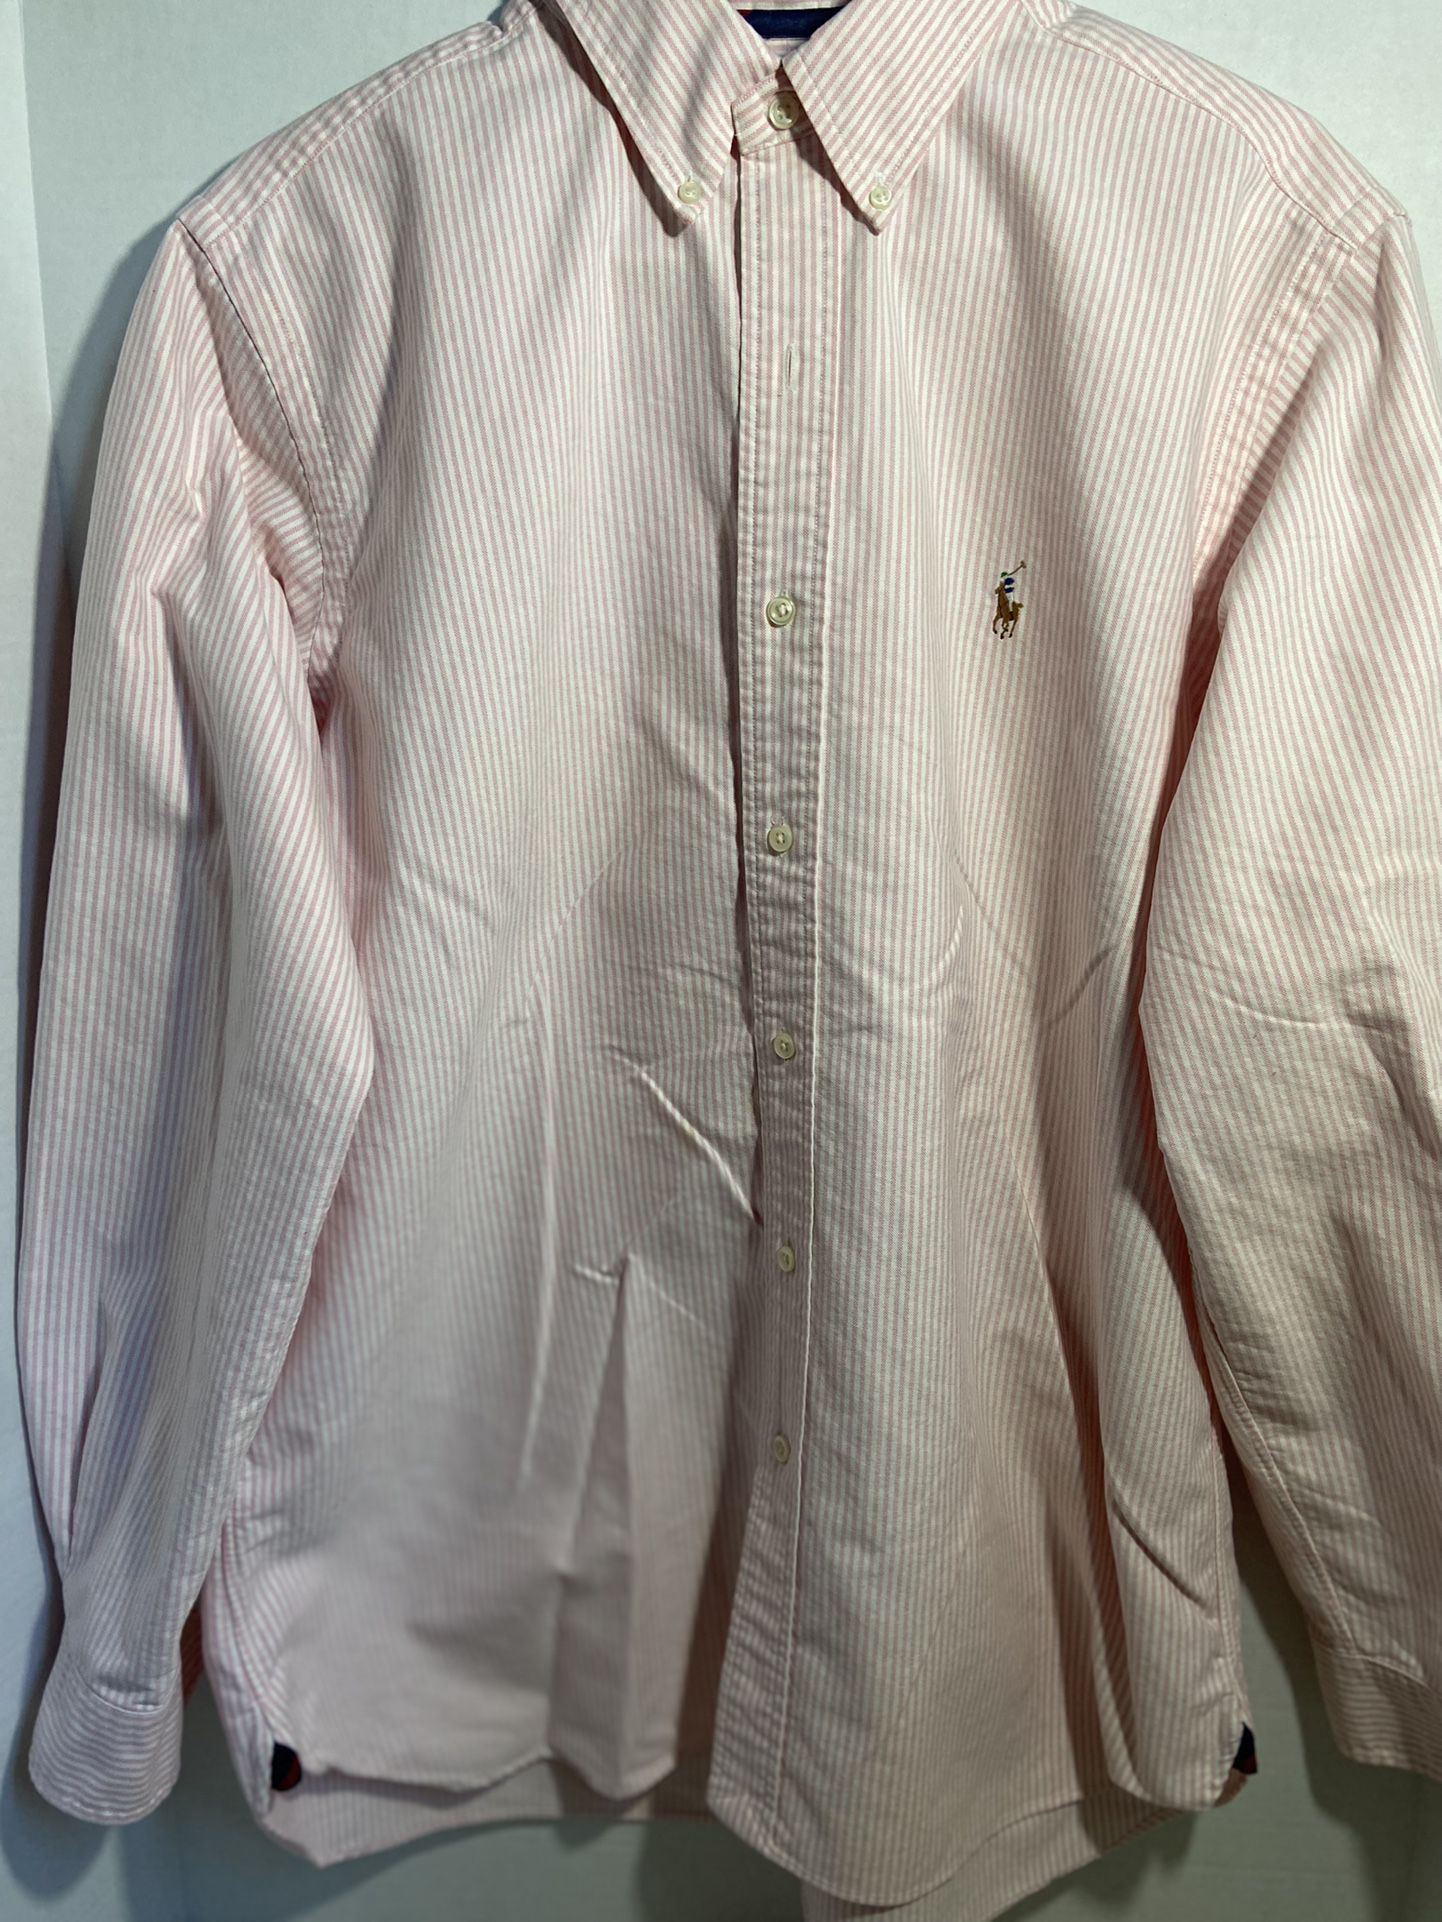 Polo Ralph Lauren Men’s Classic Fit Oxford Shirt 